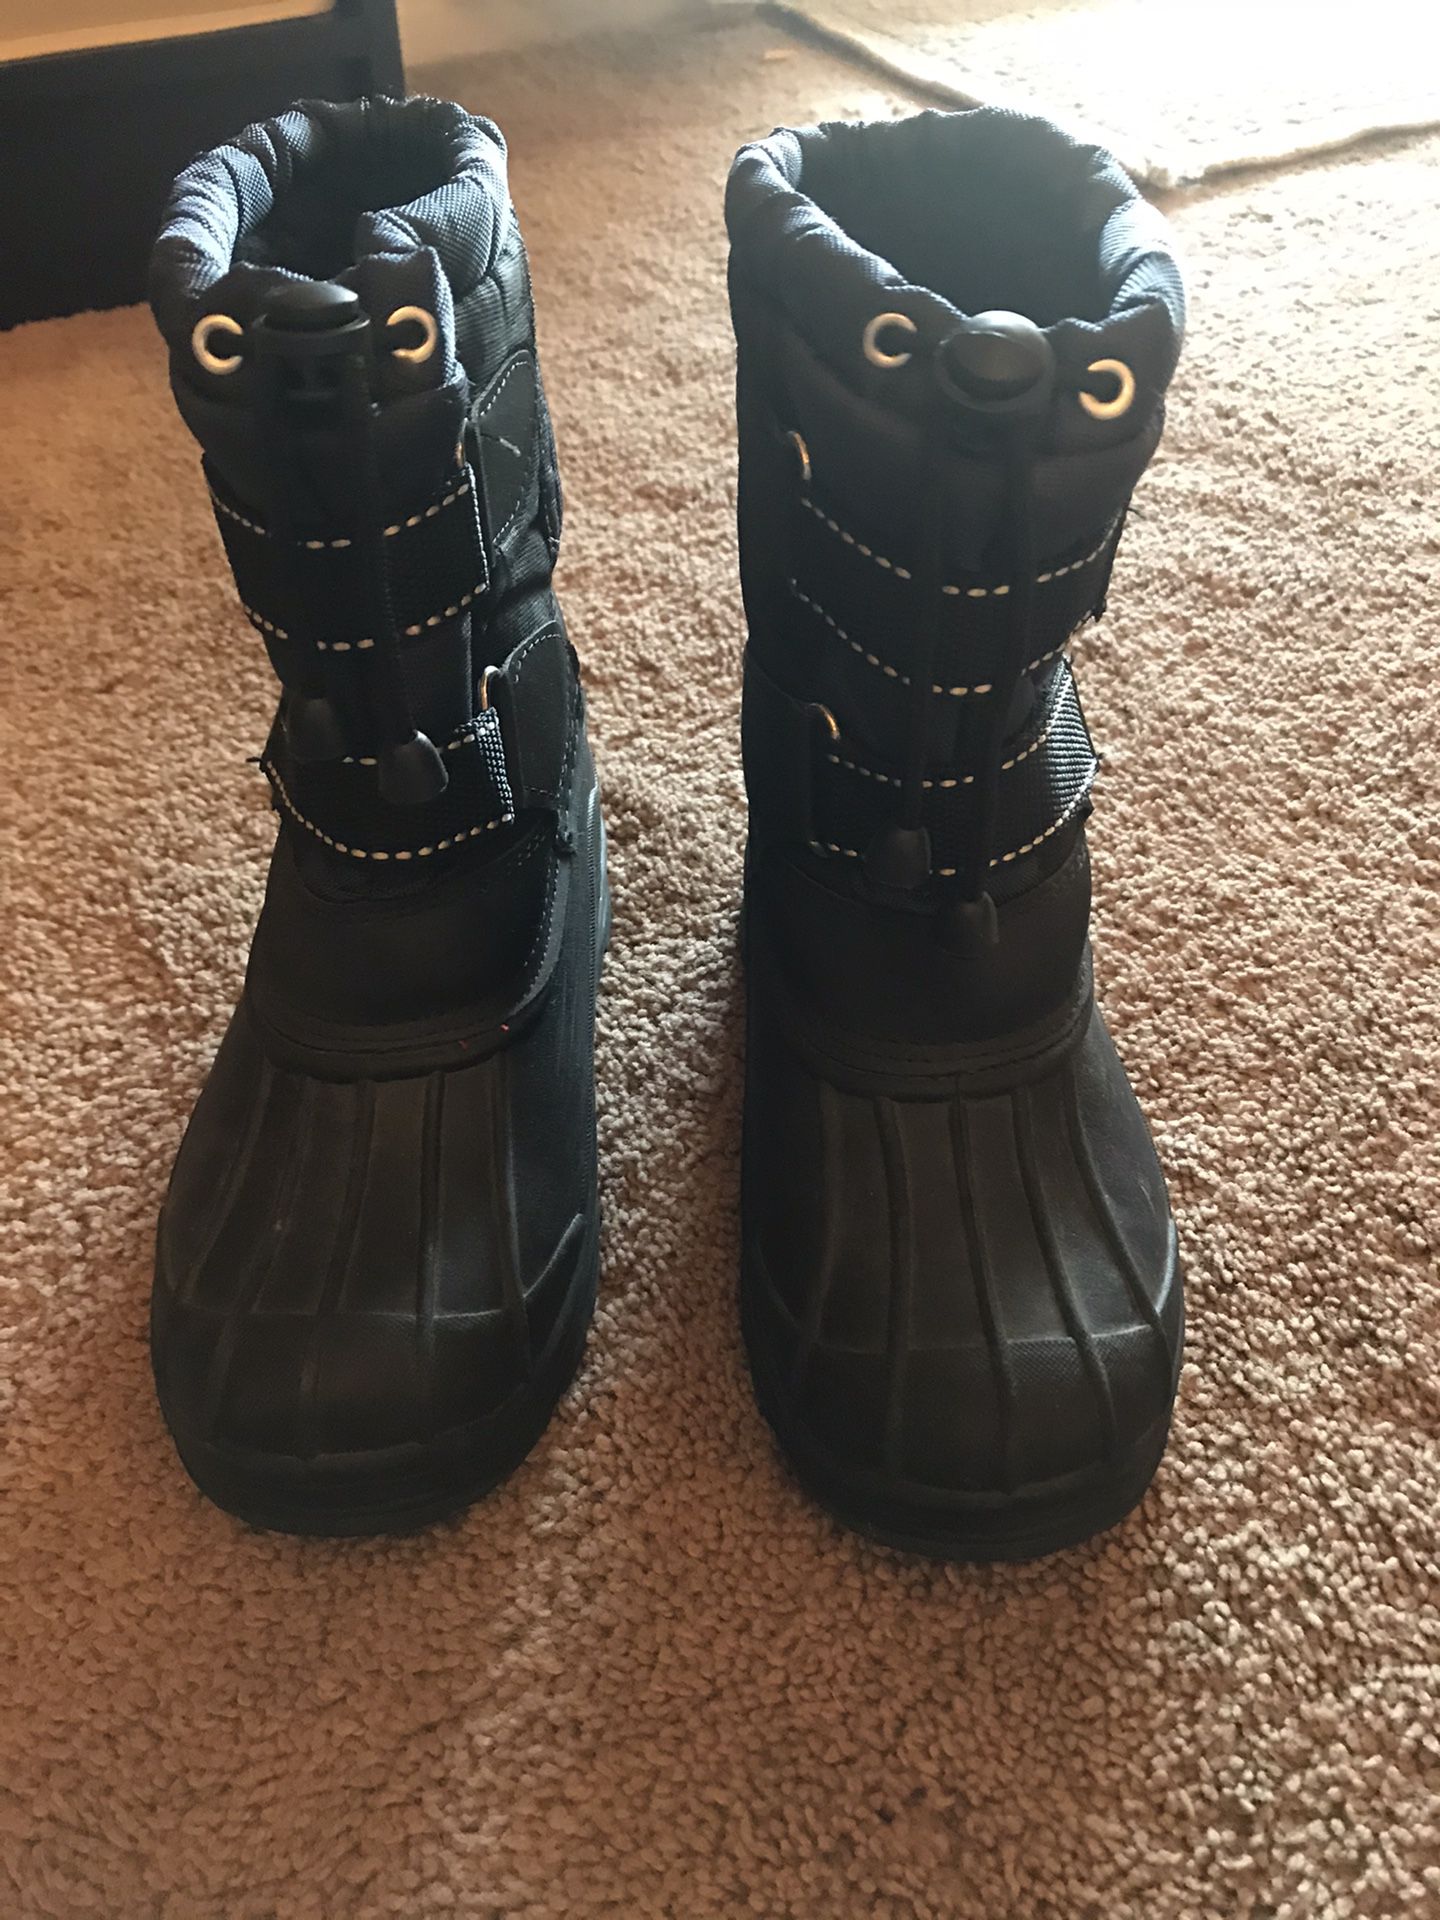 Kids snow boots-size 1